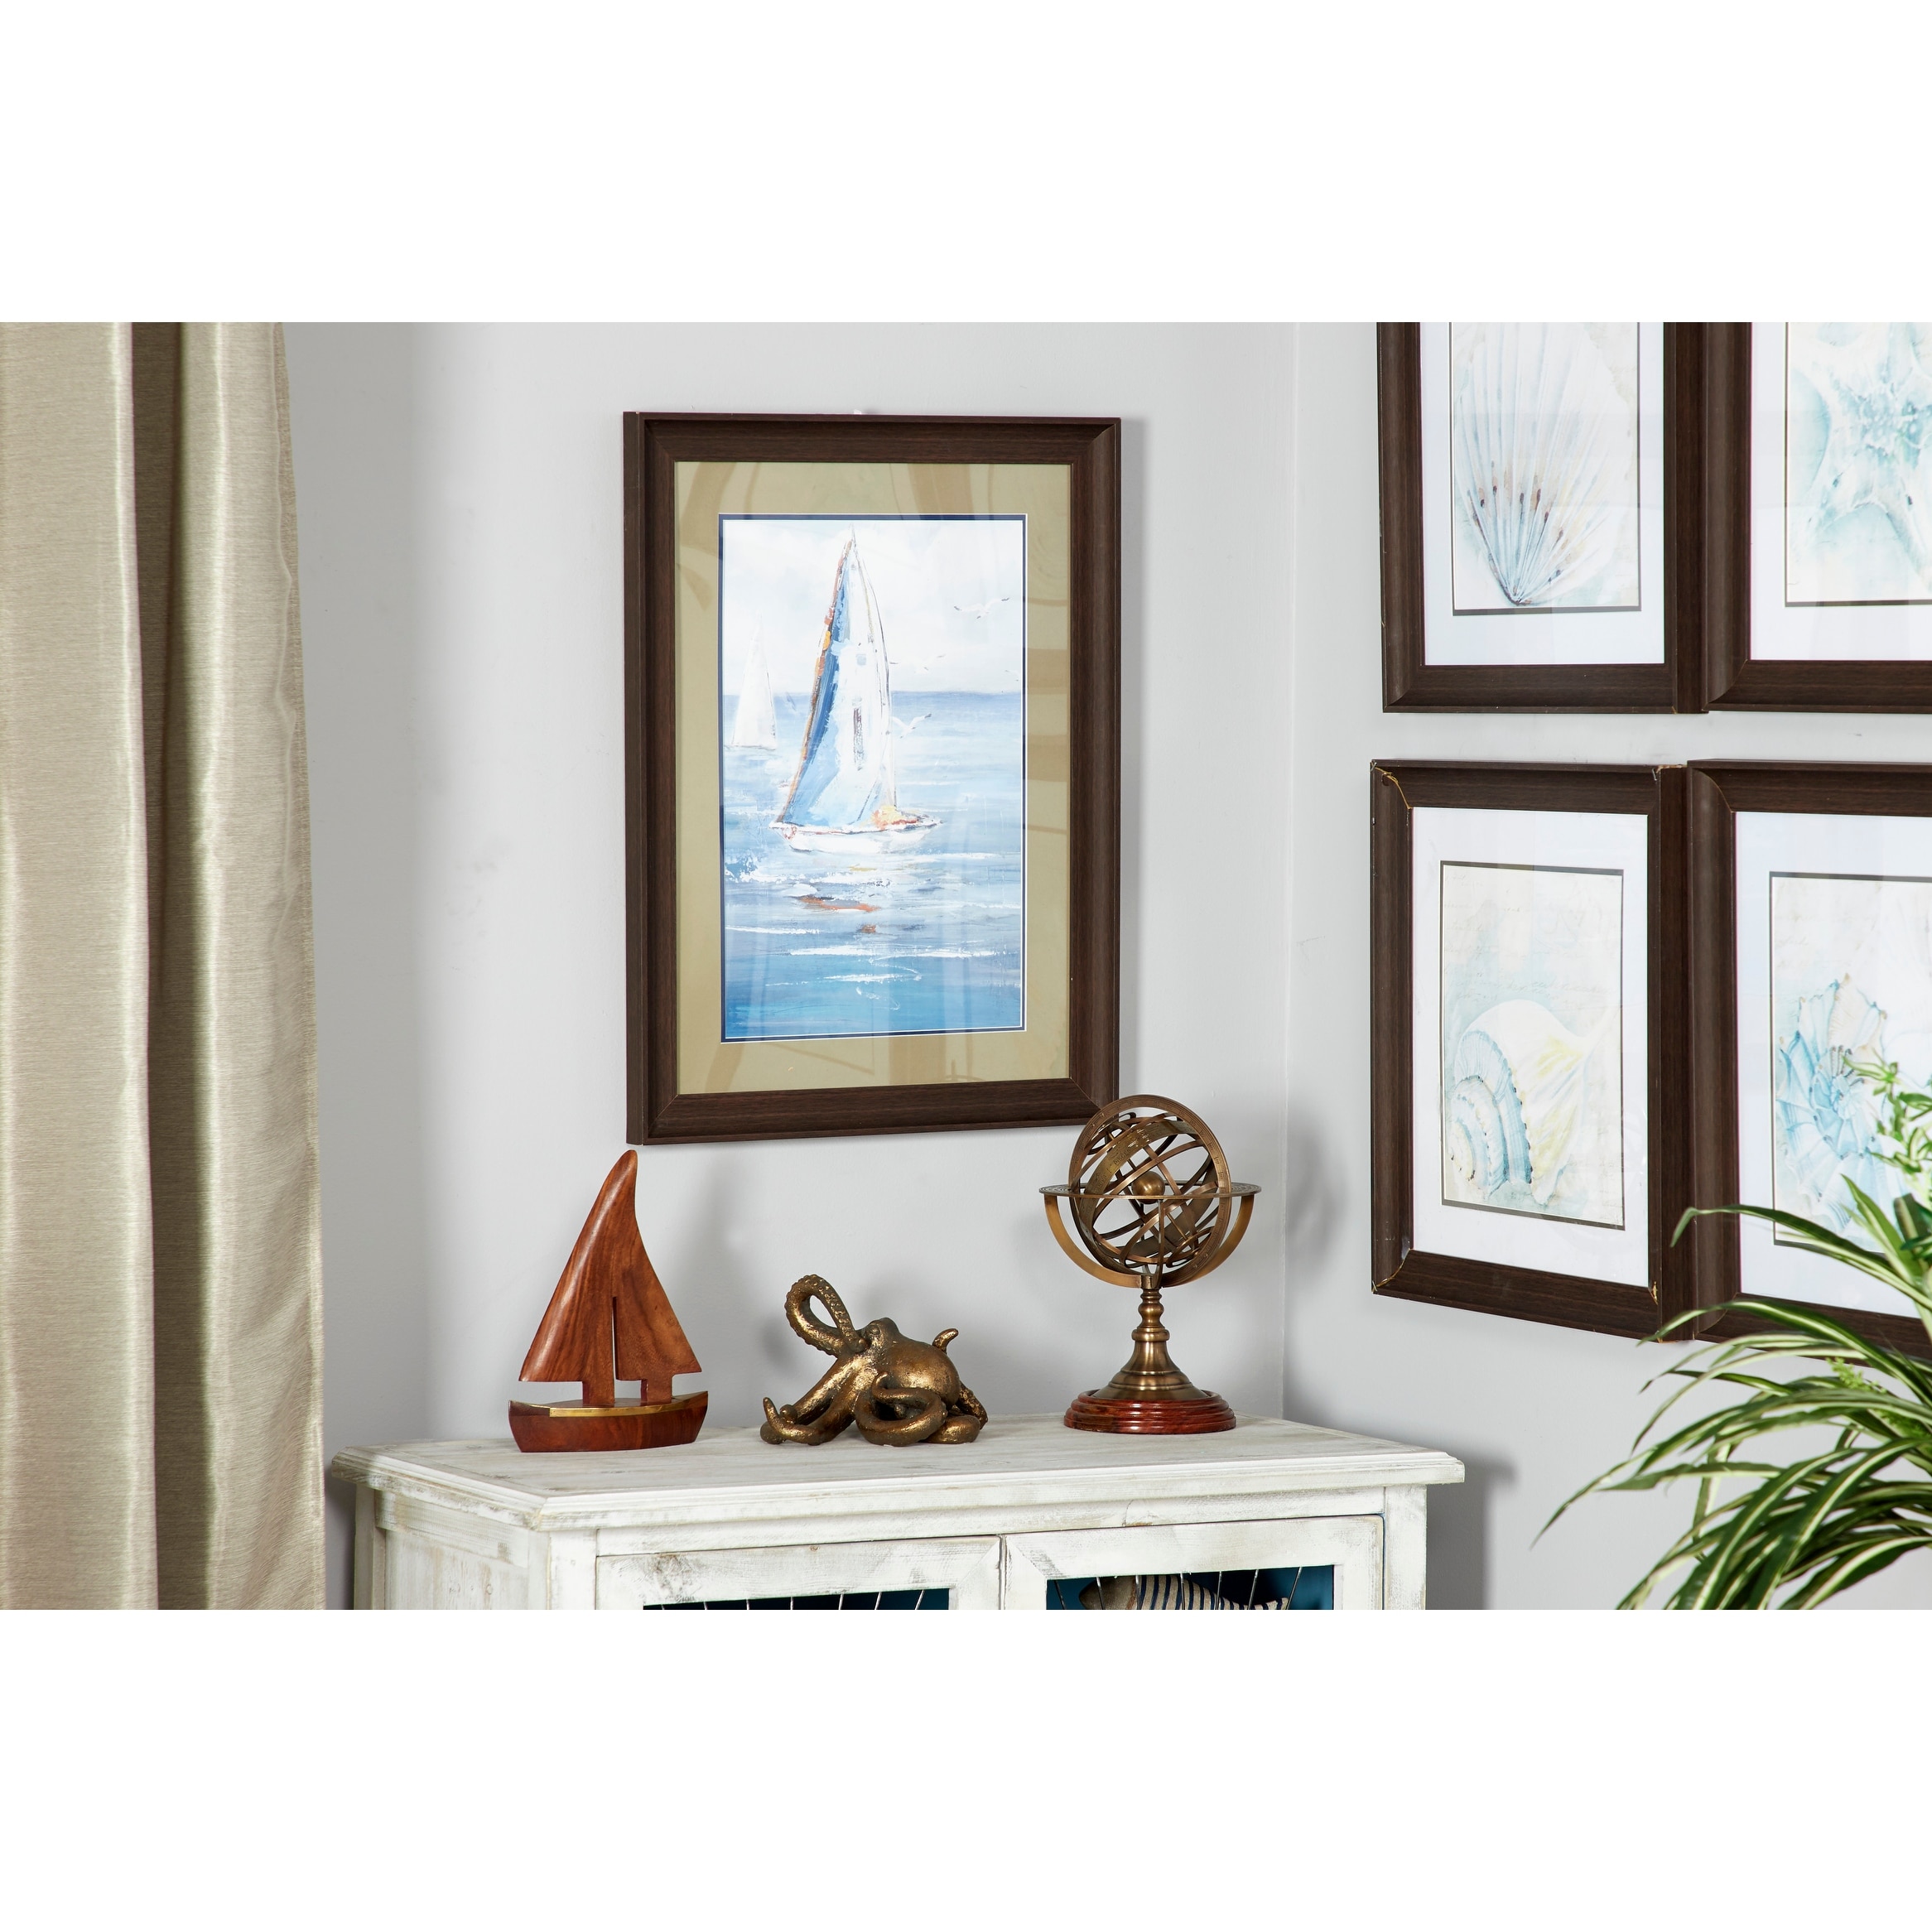 Blue Coastal Decor Sailboat Painting Print in a Rectangular Brown Wood  Frame 17.5 x 23.5 18 x x 24 On Sale Bed Bath  Beyond 32837048